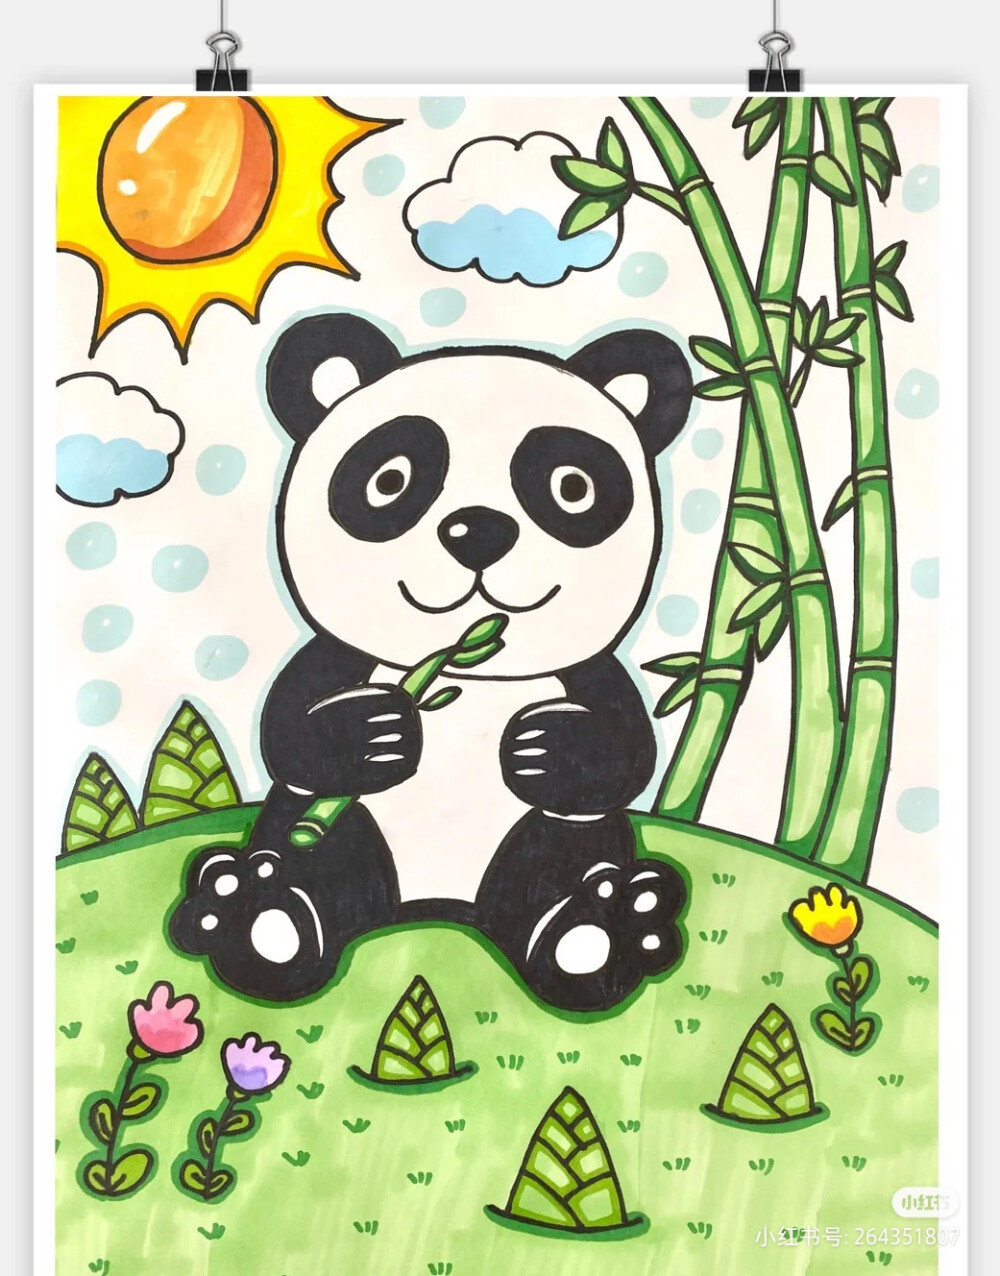 q版熊猫吃竹子简笔画图片